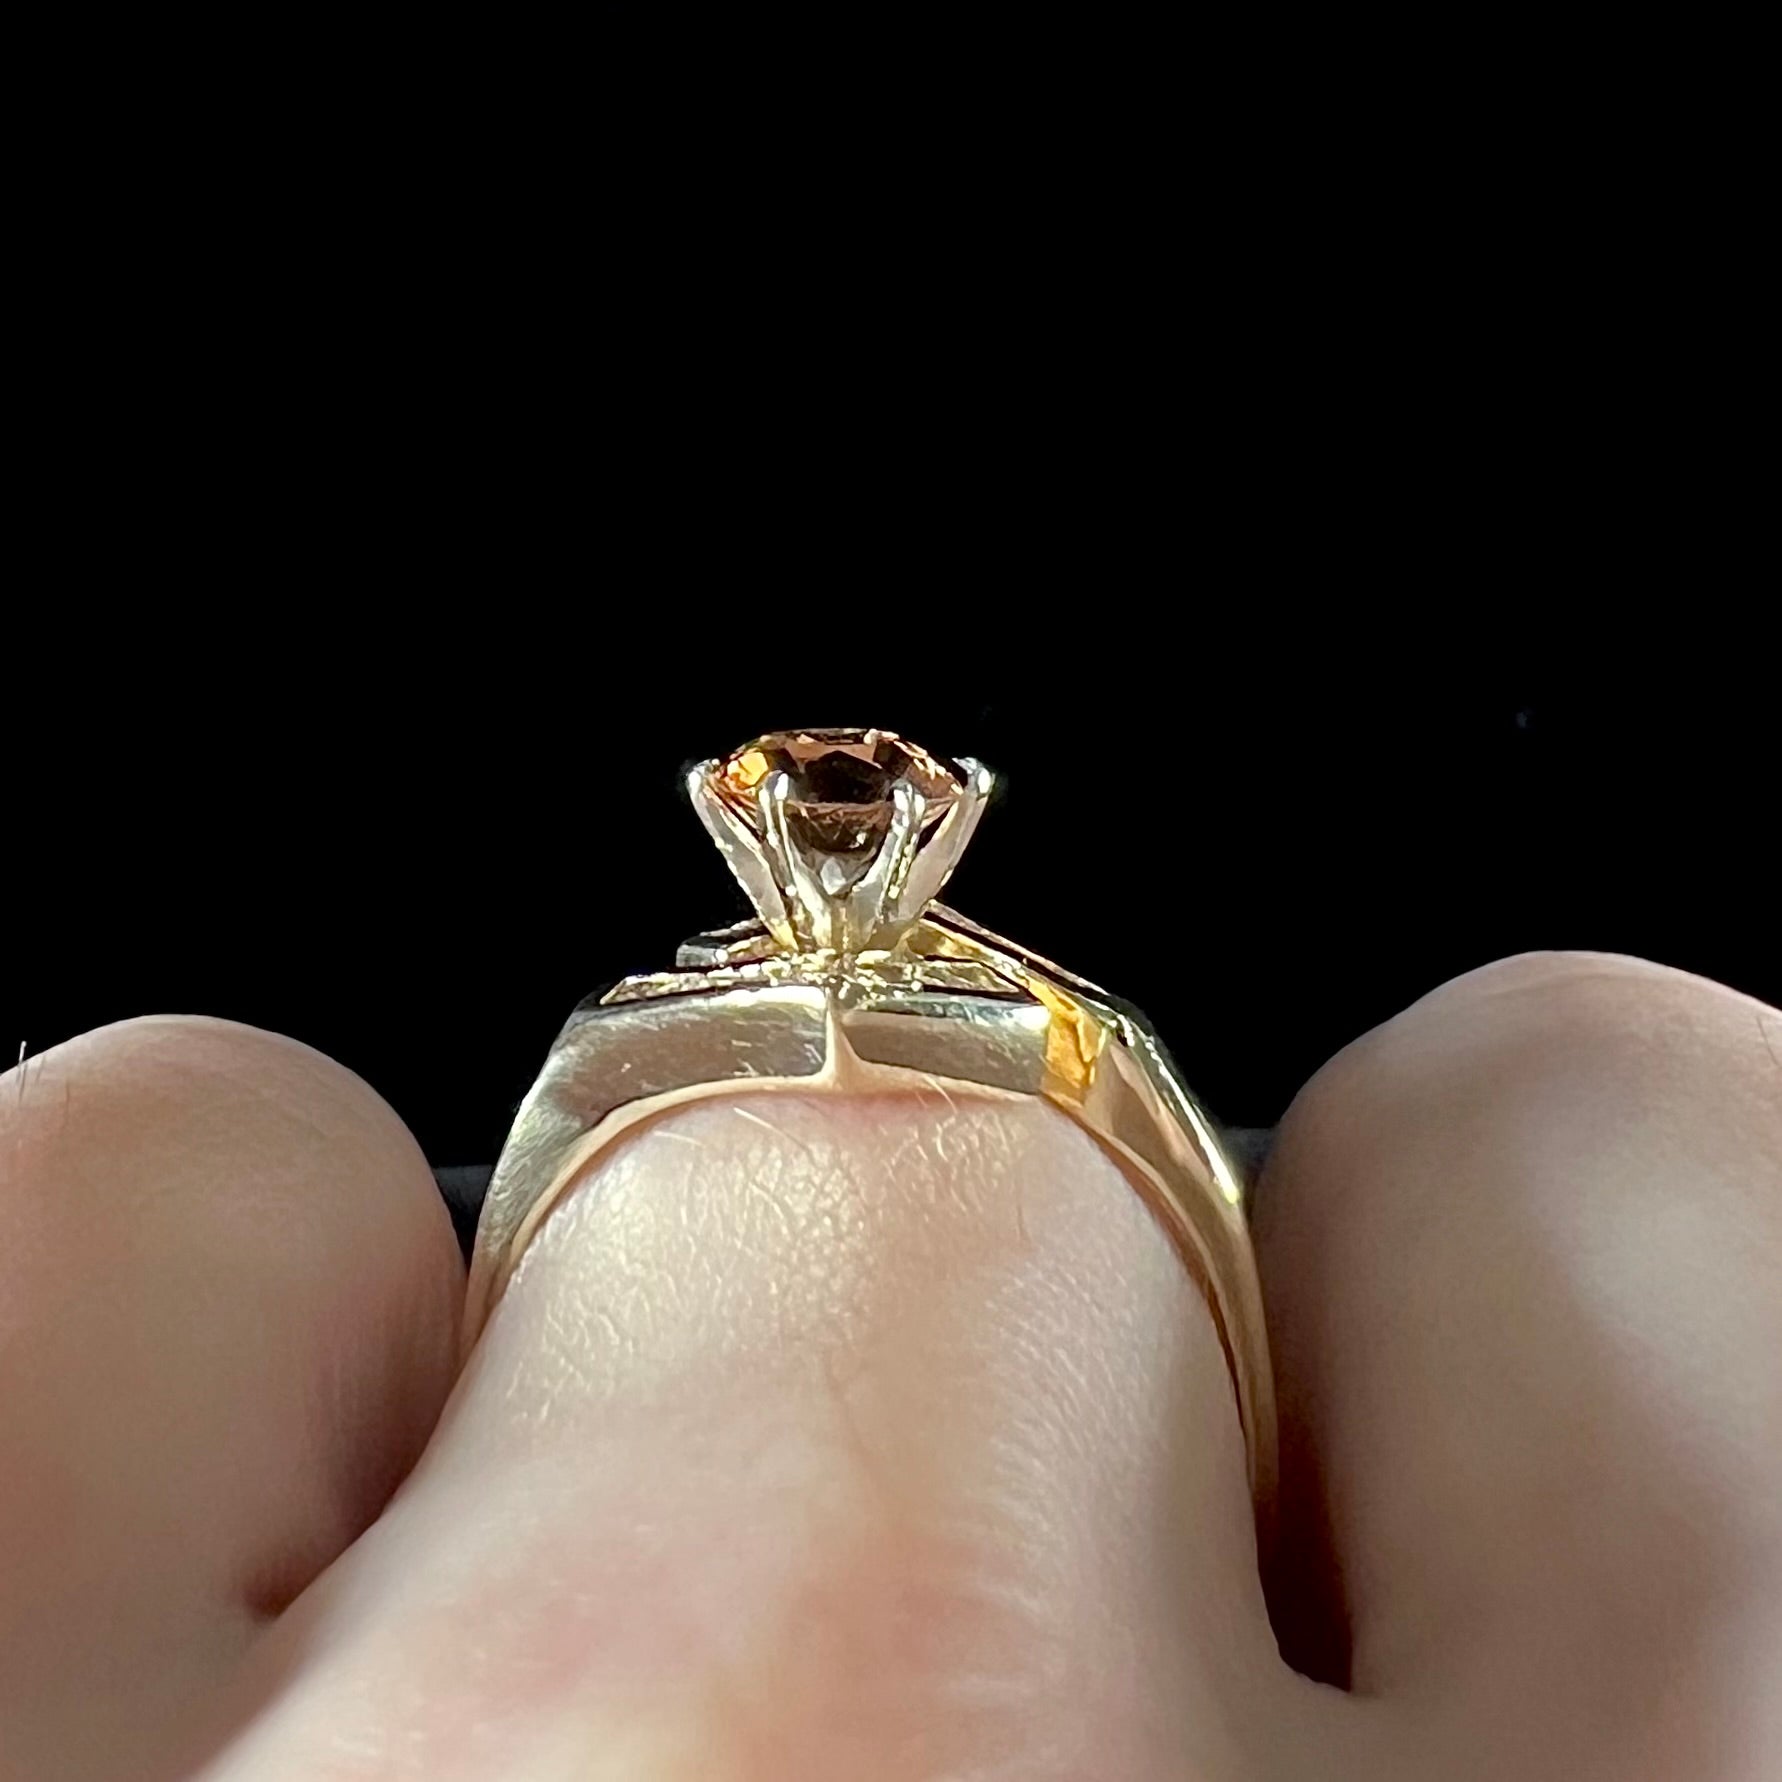 Blue Topaz Engagement Ring 1/4 ct tw Diamonds 14K White Gold | Kay